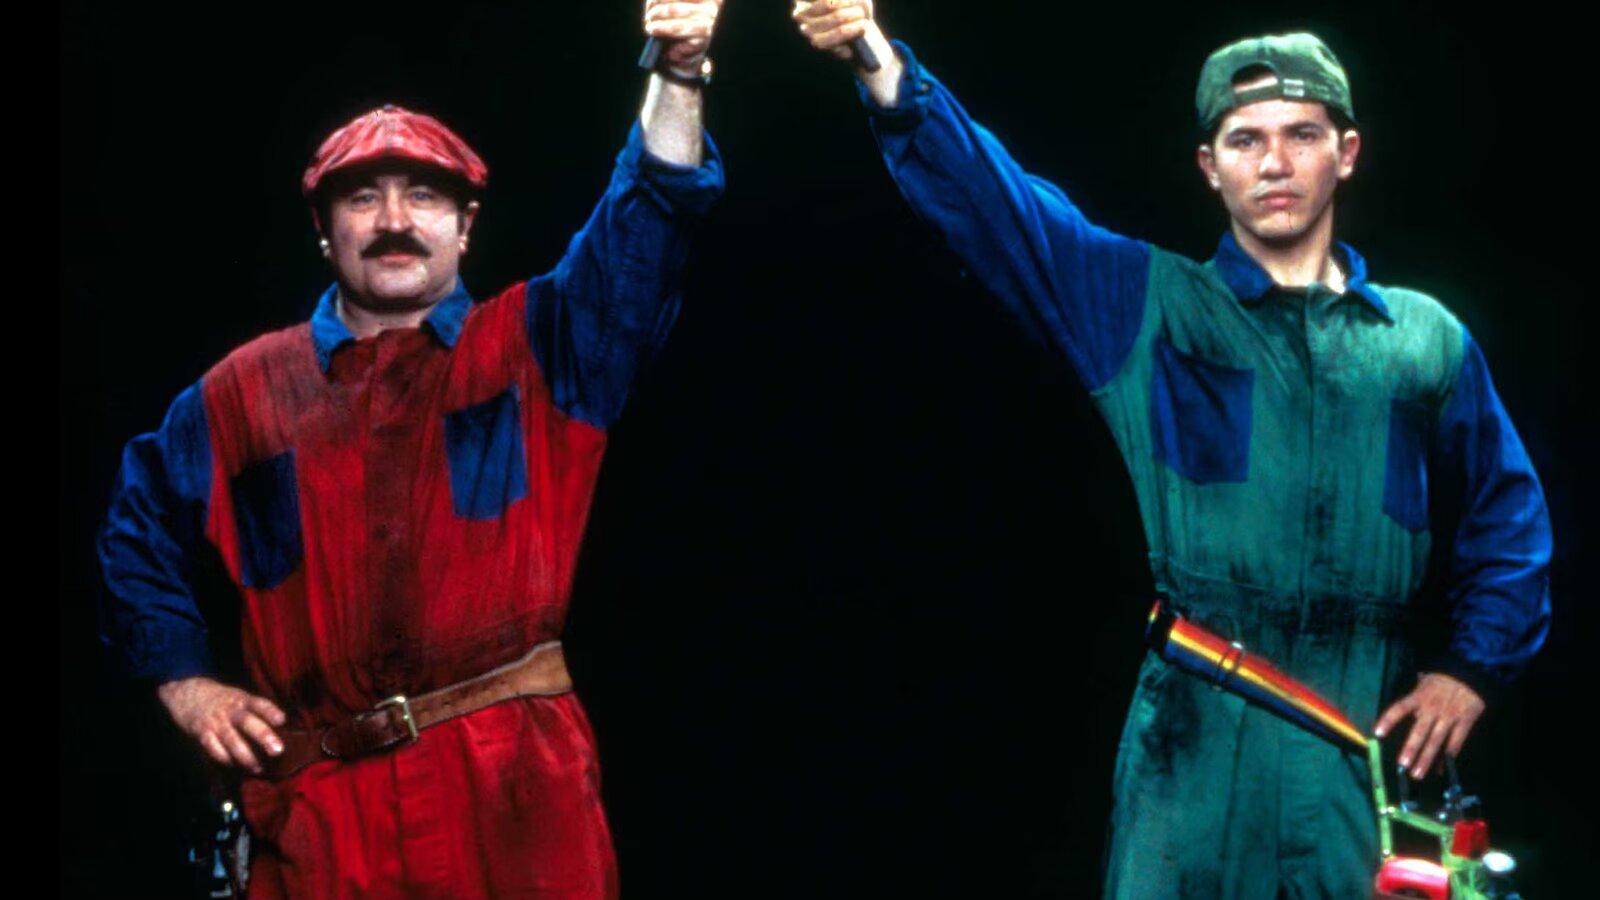 Bob Hoskins and John Leguizamo on the poster for 1993's Super Mario Bros movie.